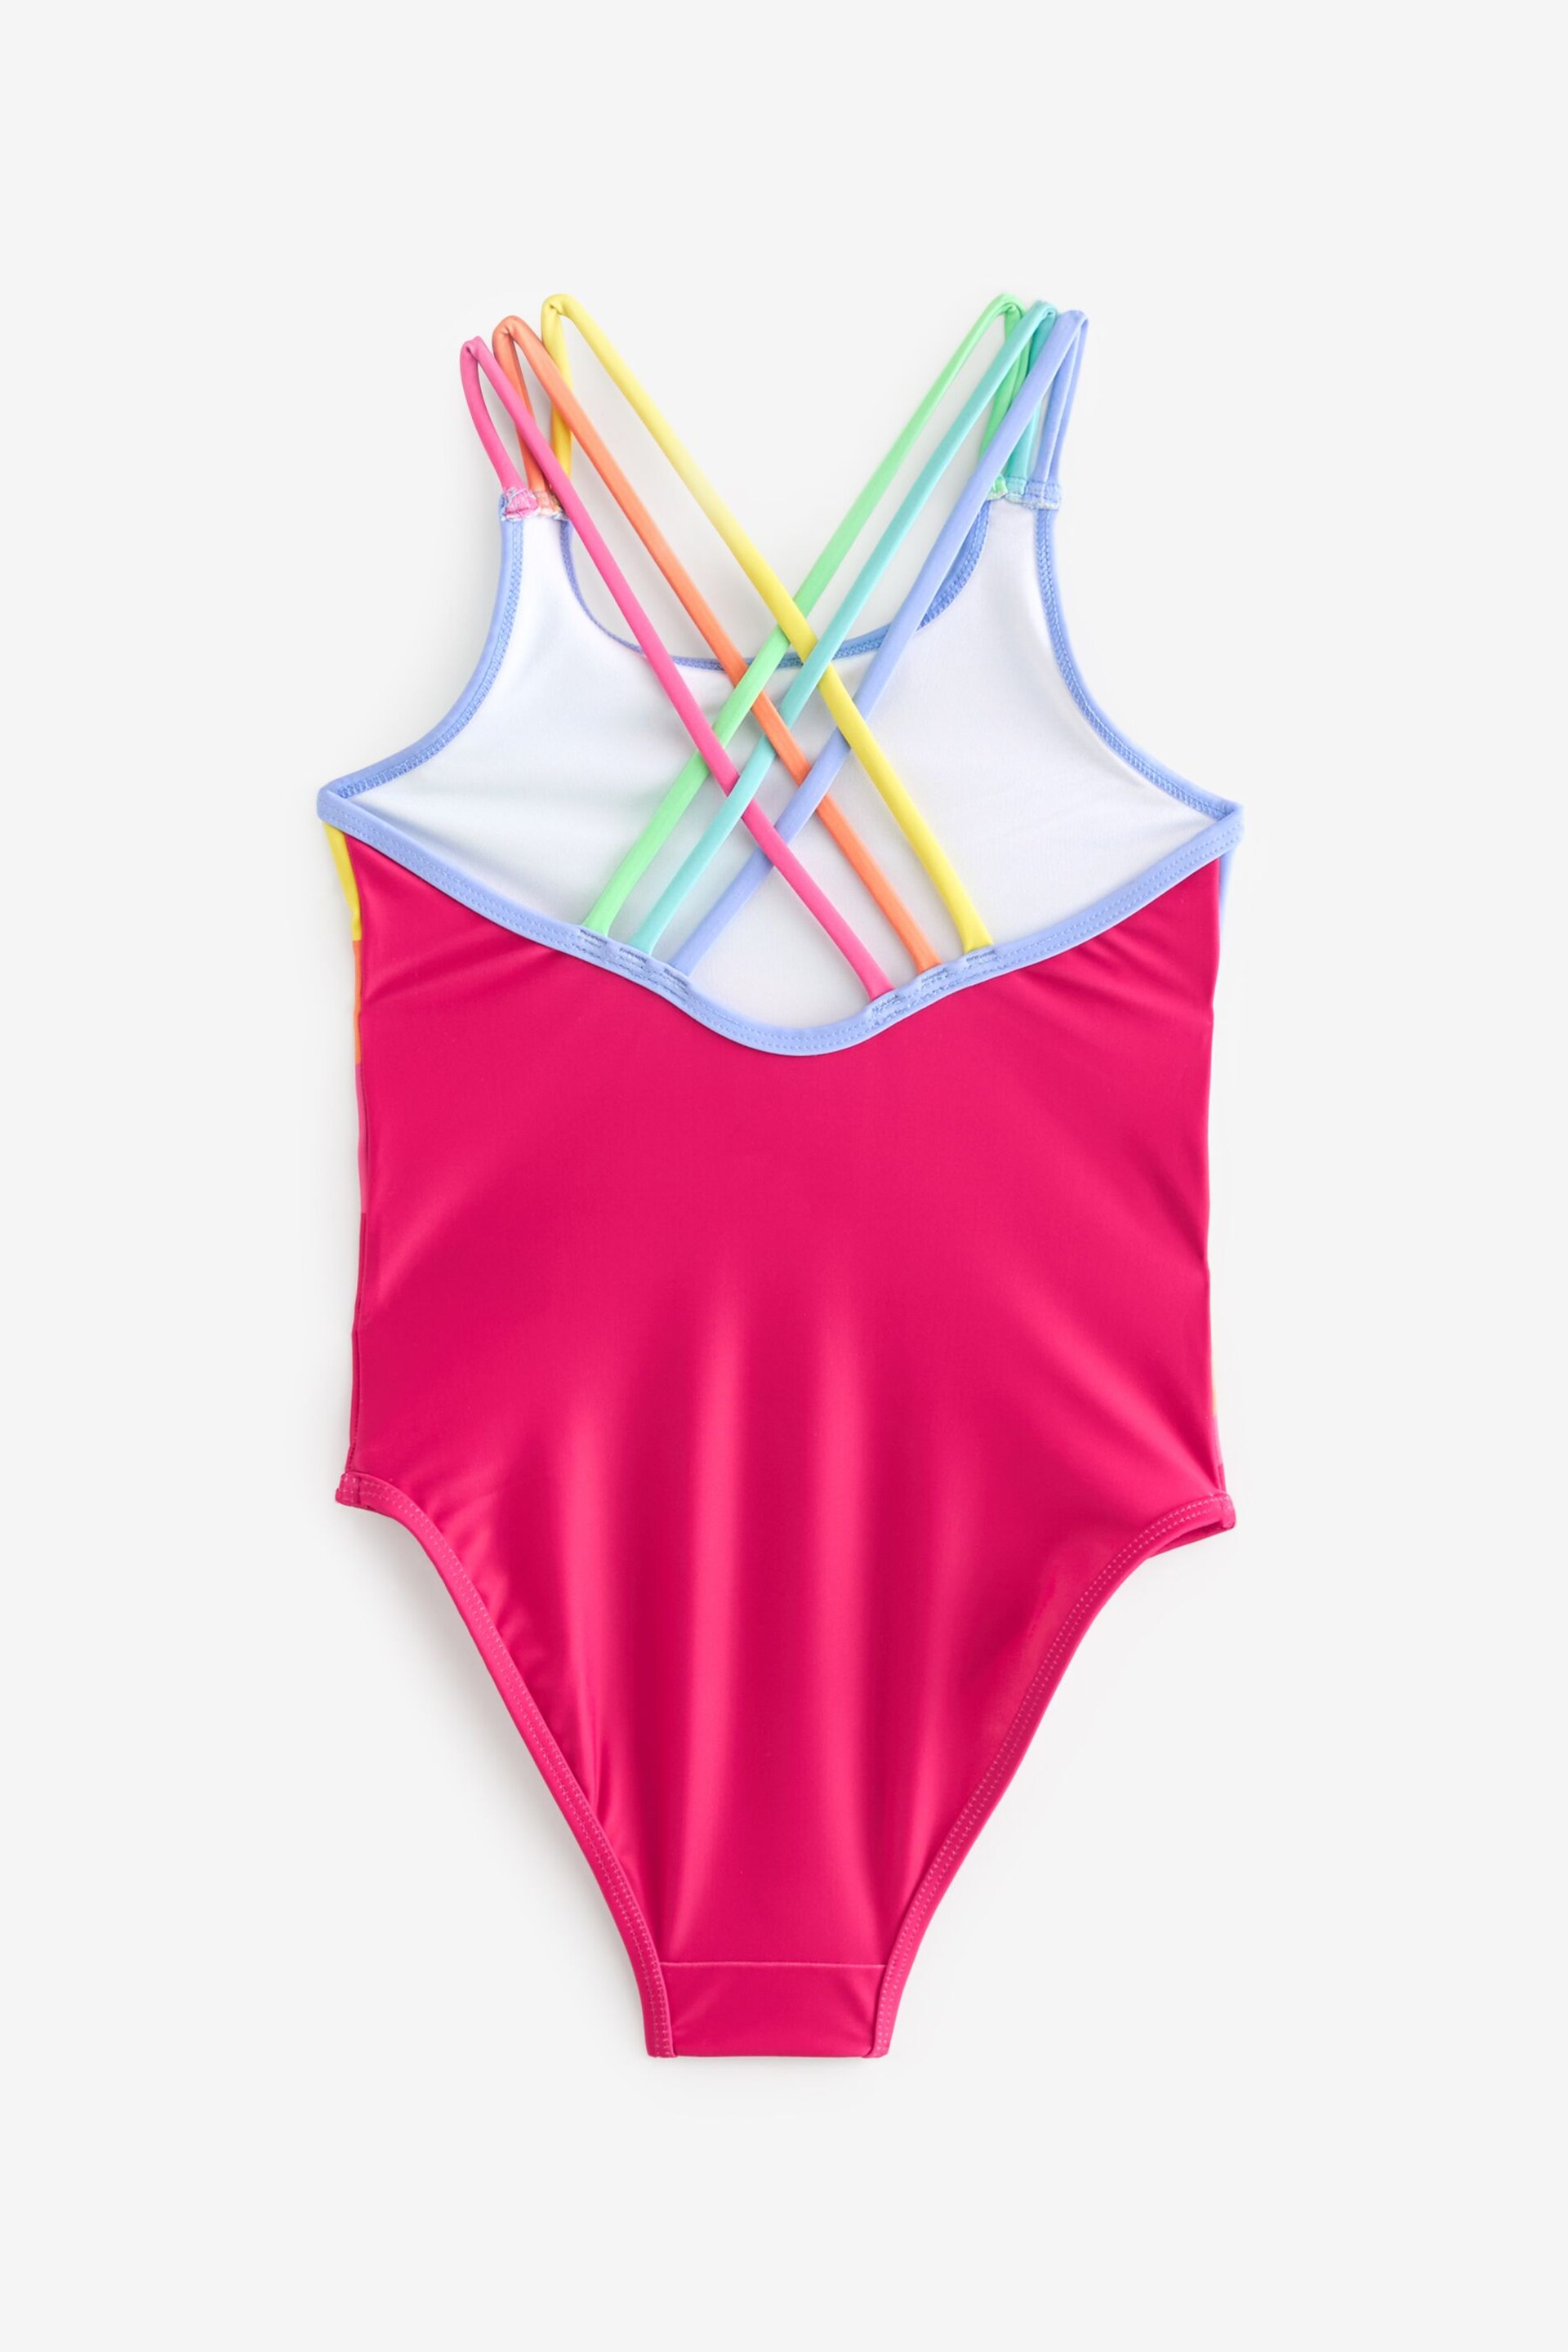 Little Bird by Jools Oliver Multi Pastel Rainbow Swimsuit - Image 2 of 4